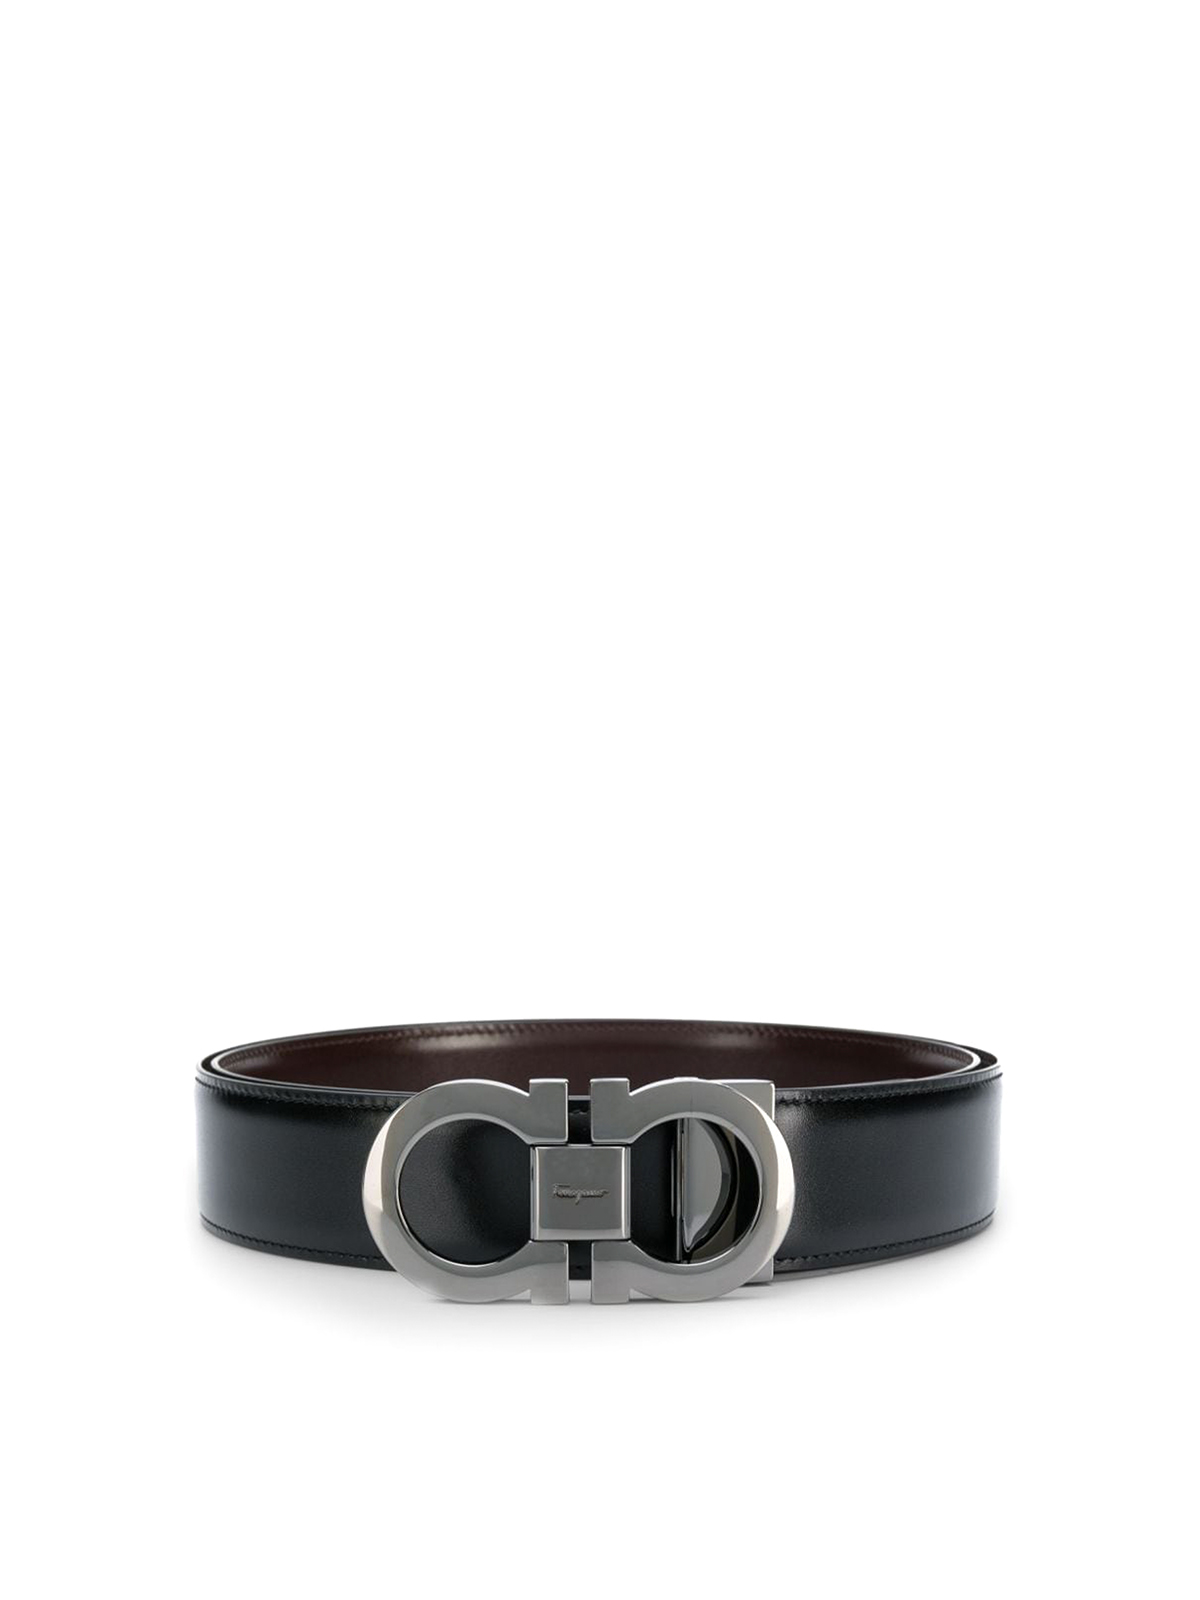 Belts Salvatore Ferragamo - Leather belt with engraved logo -  679535644557001